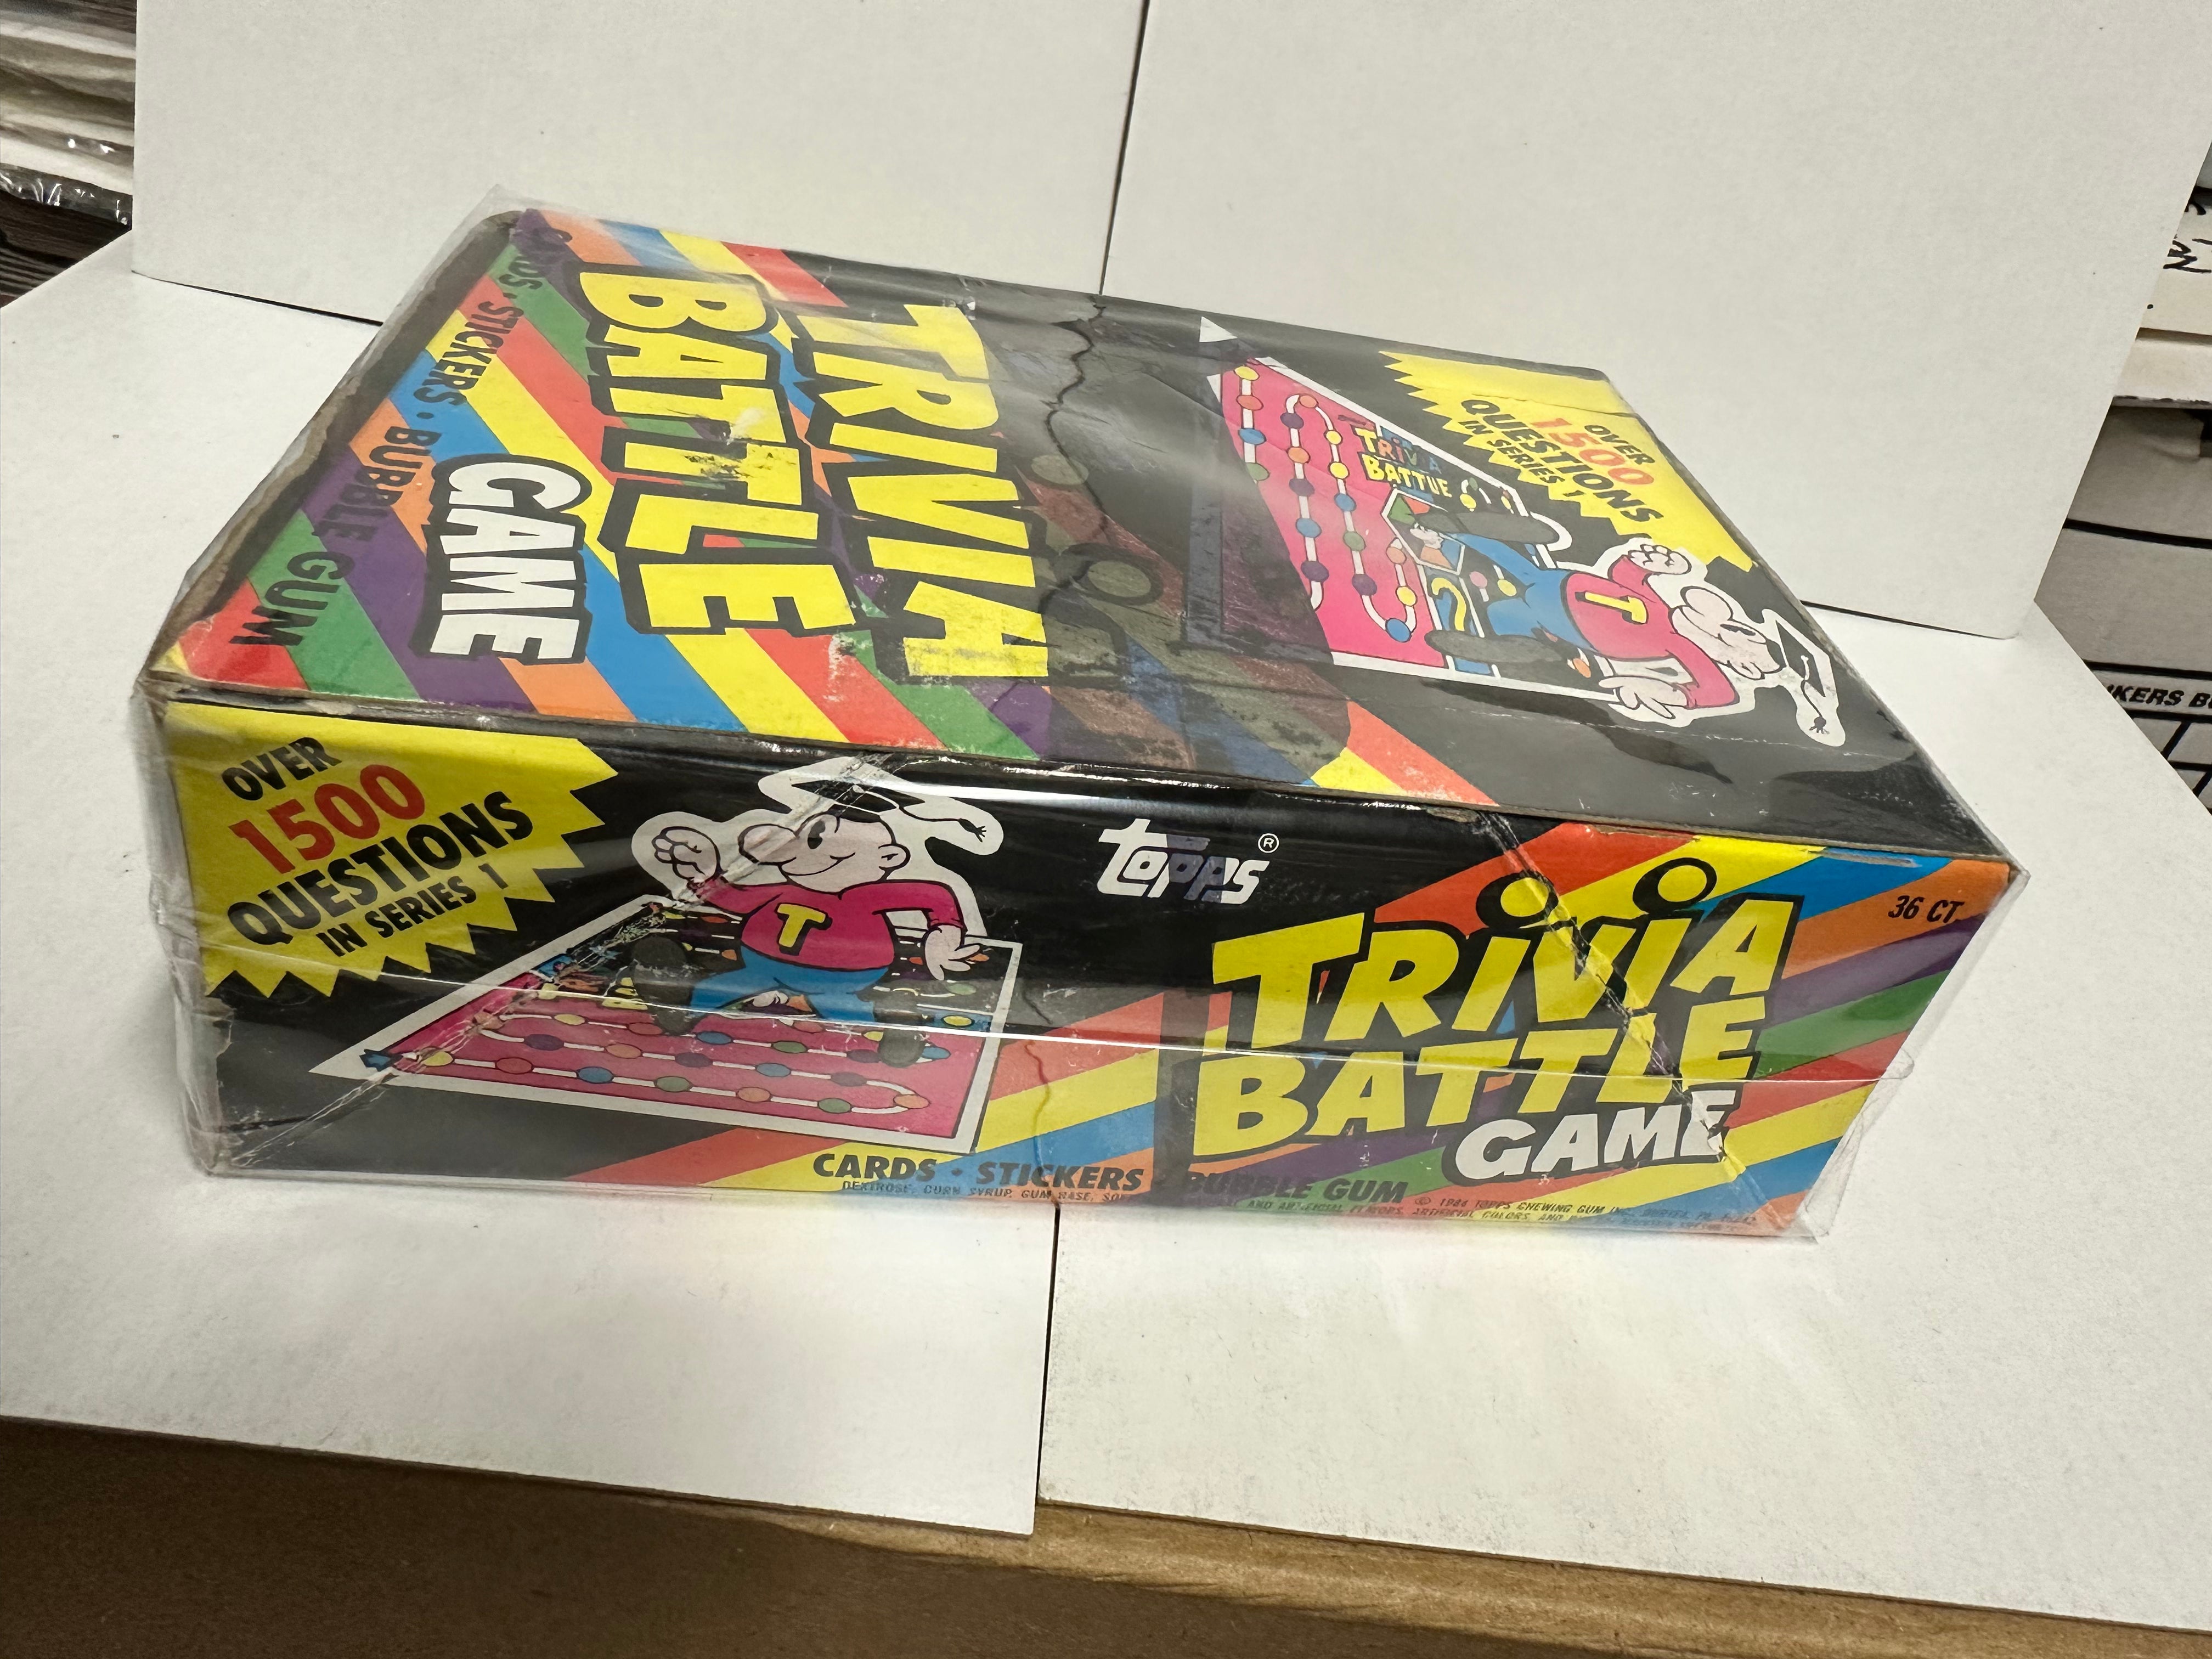 1984 Topps Trivia Battle game 36 packs rare box.